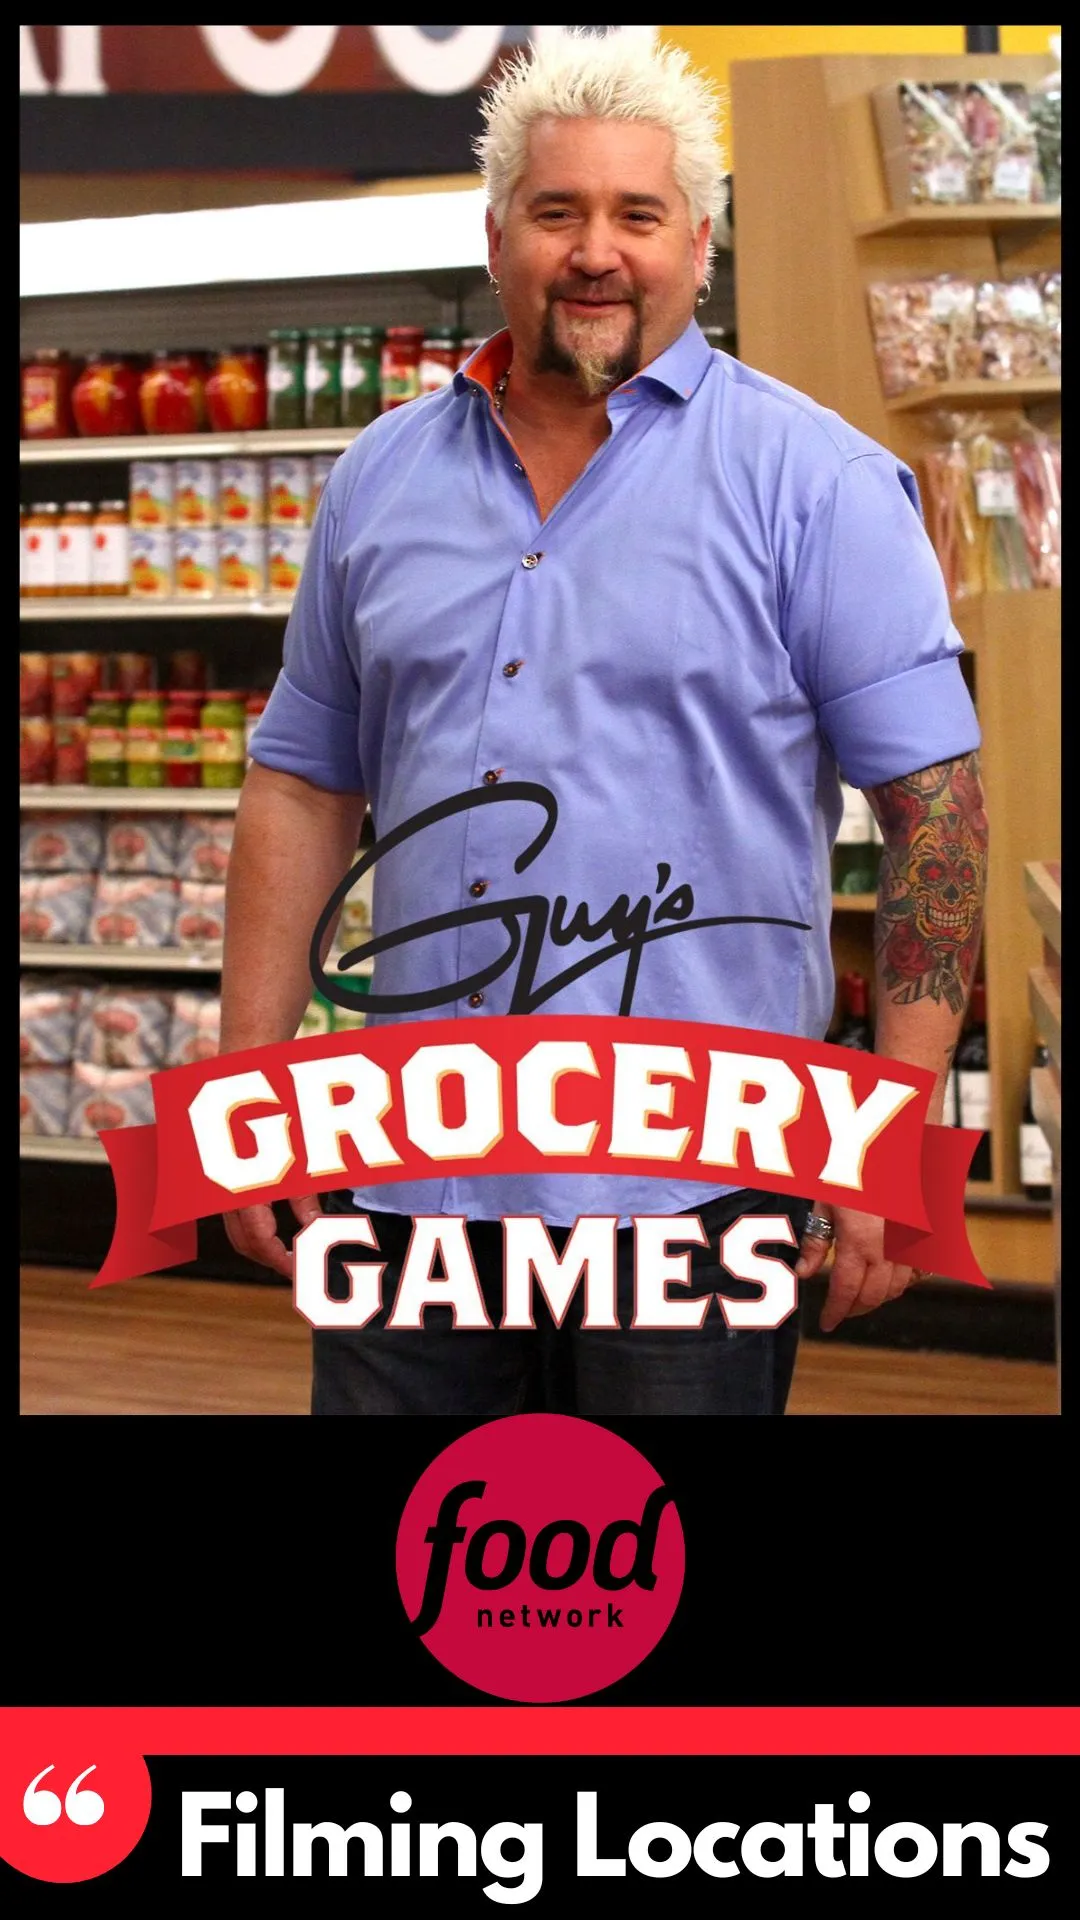 Where Is Guy's Grocery Games Filmed